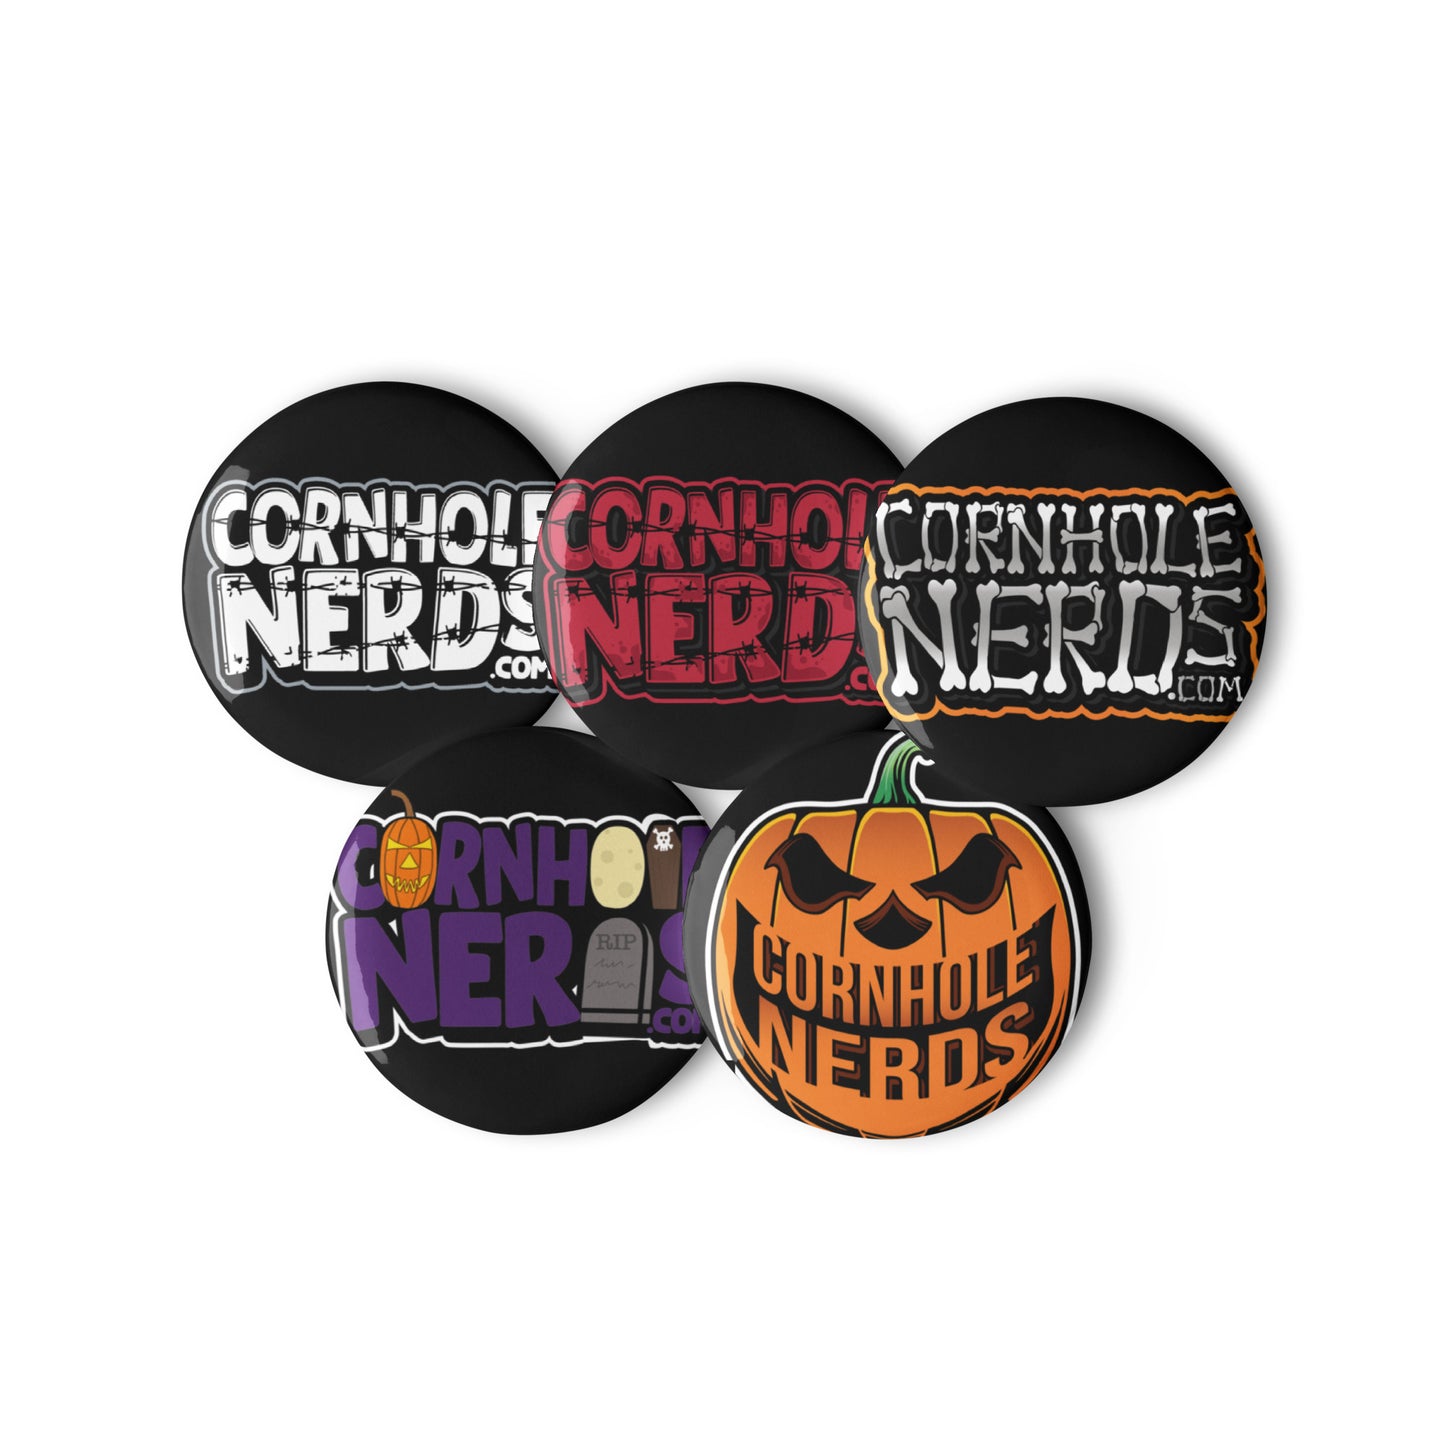 Cornhole Nerds Team Mean set of pin buttons